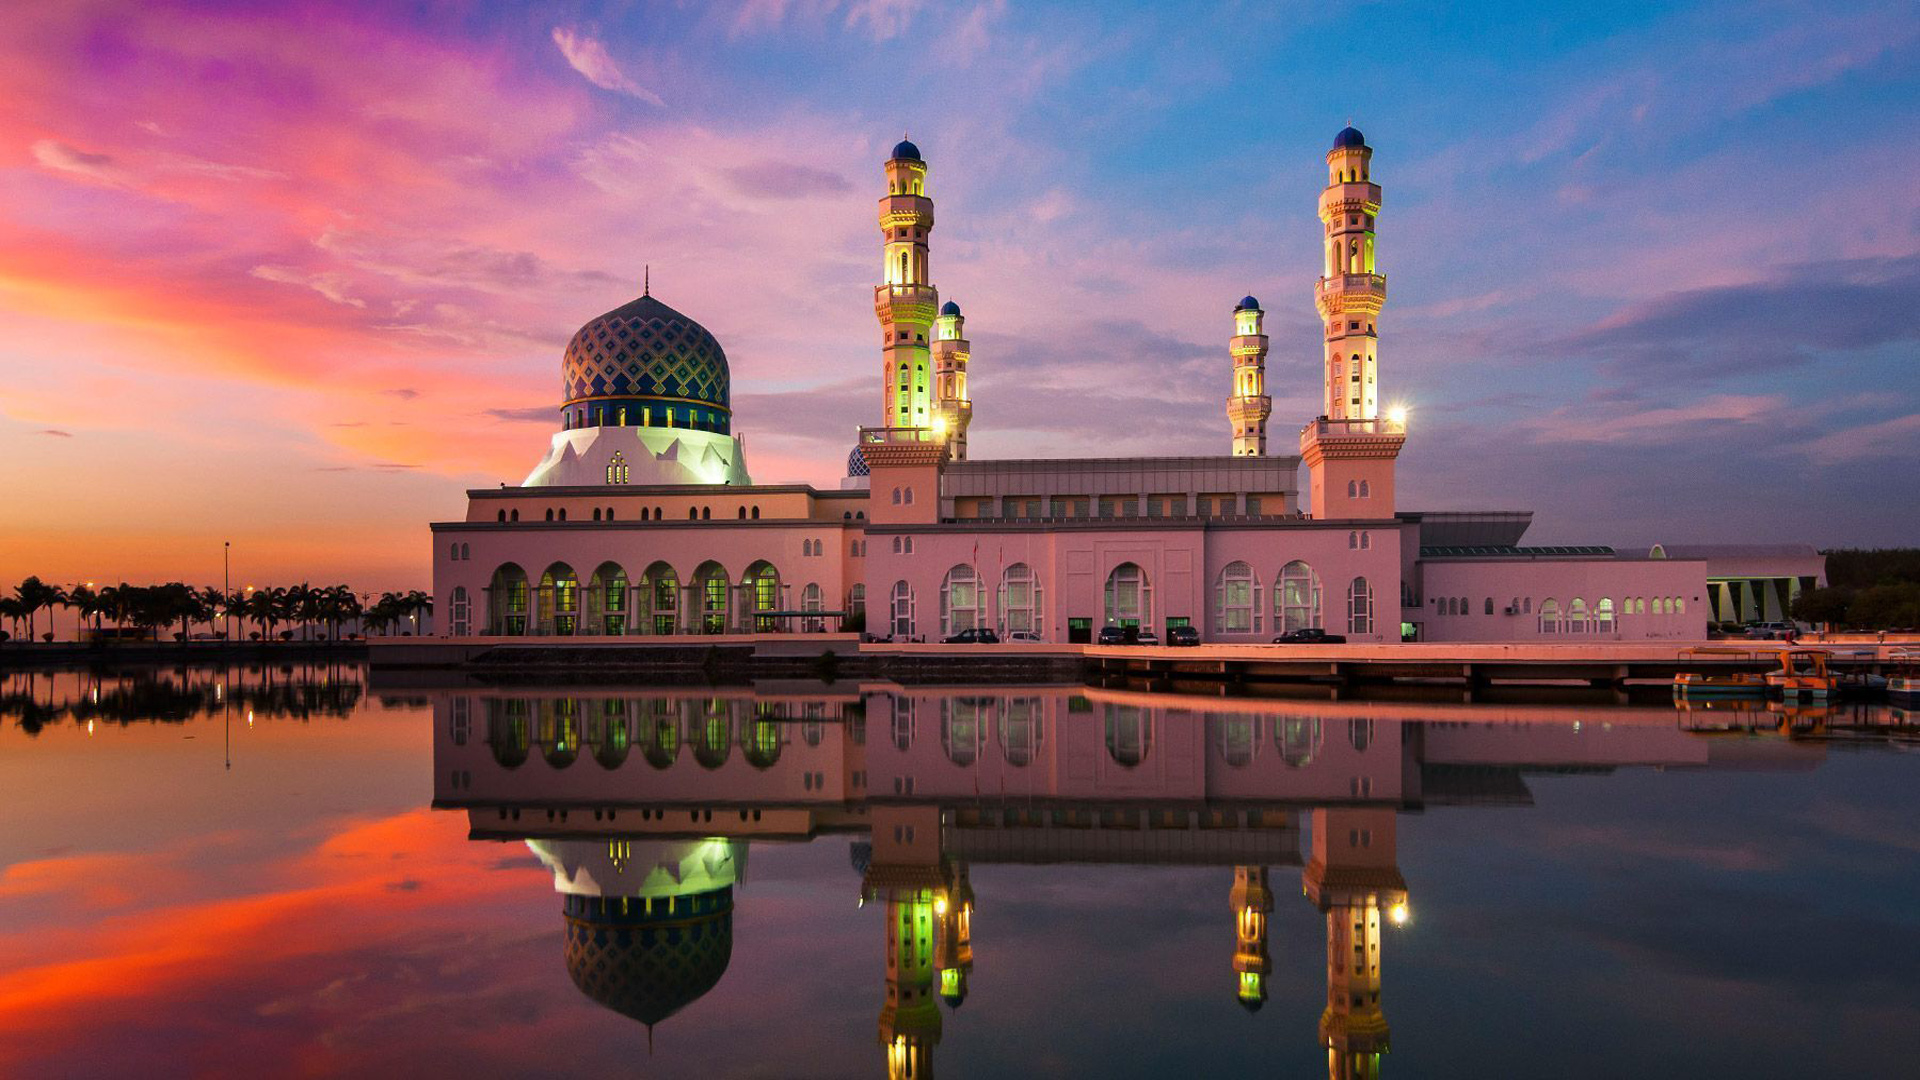 Kota Kinabalu City Mosque Is The Second Main Mosque In Kota Kinabalu